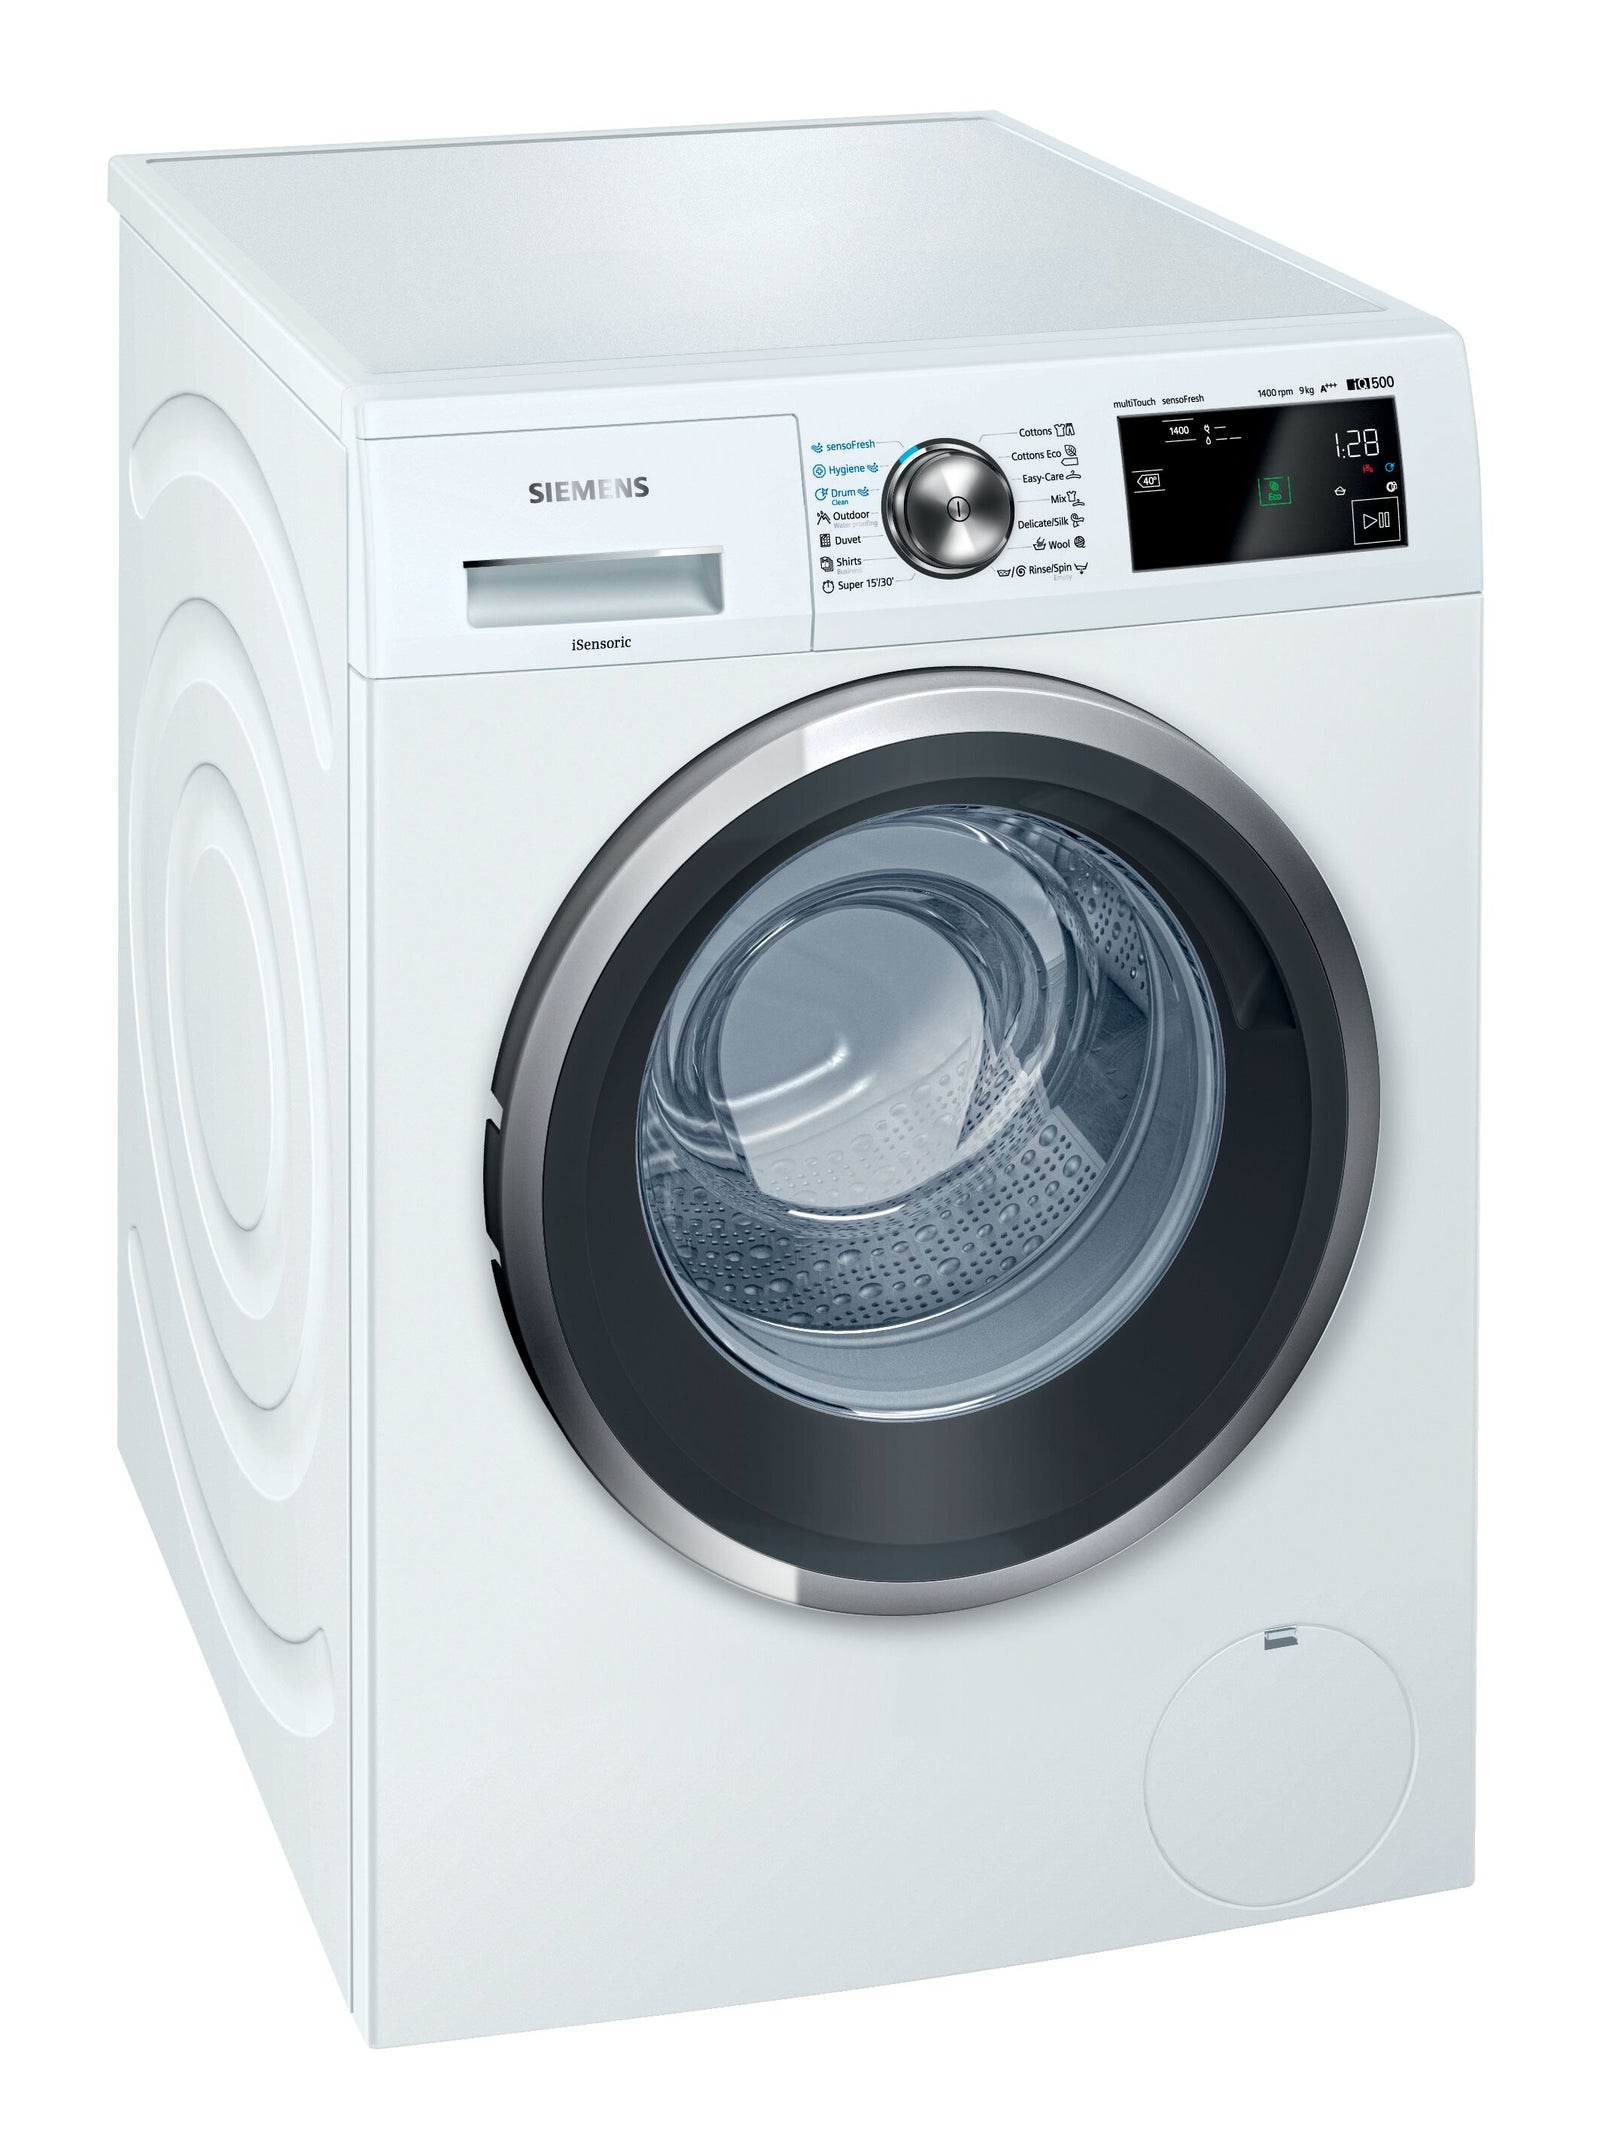 SIEMENS Washing Machine 9kg 1400rpm IQ500 IQdrive A+++ White